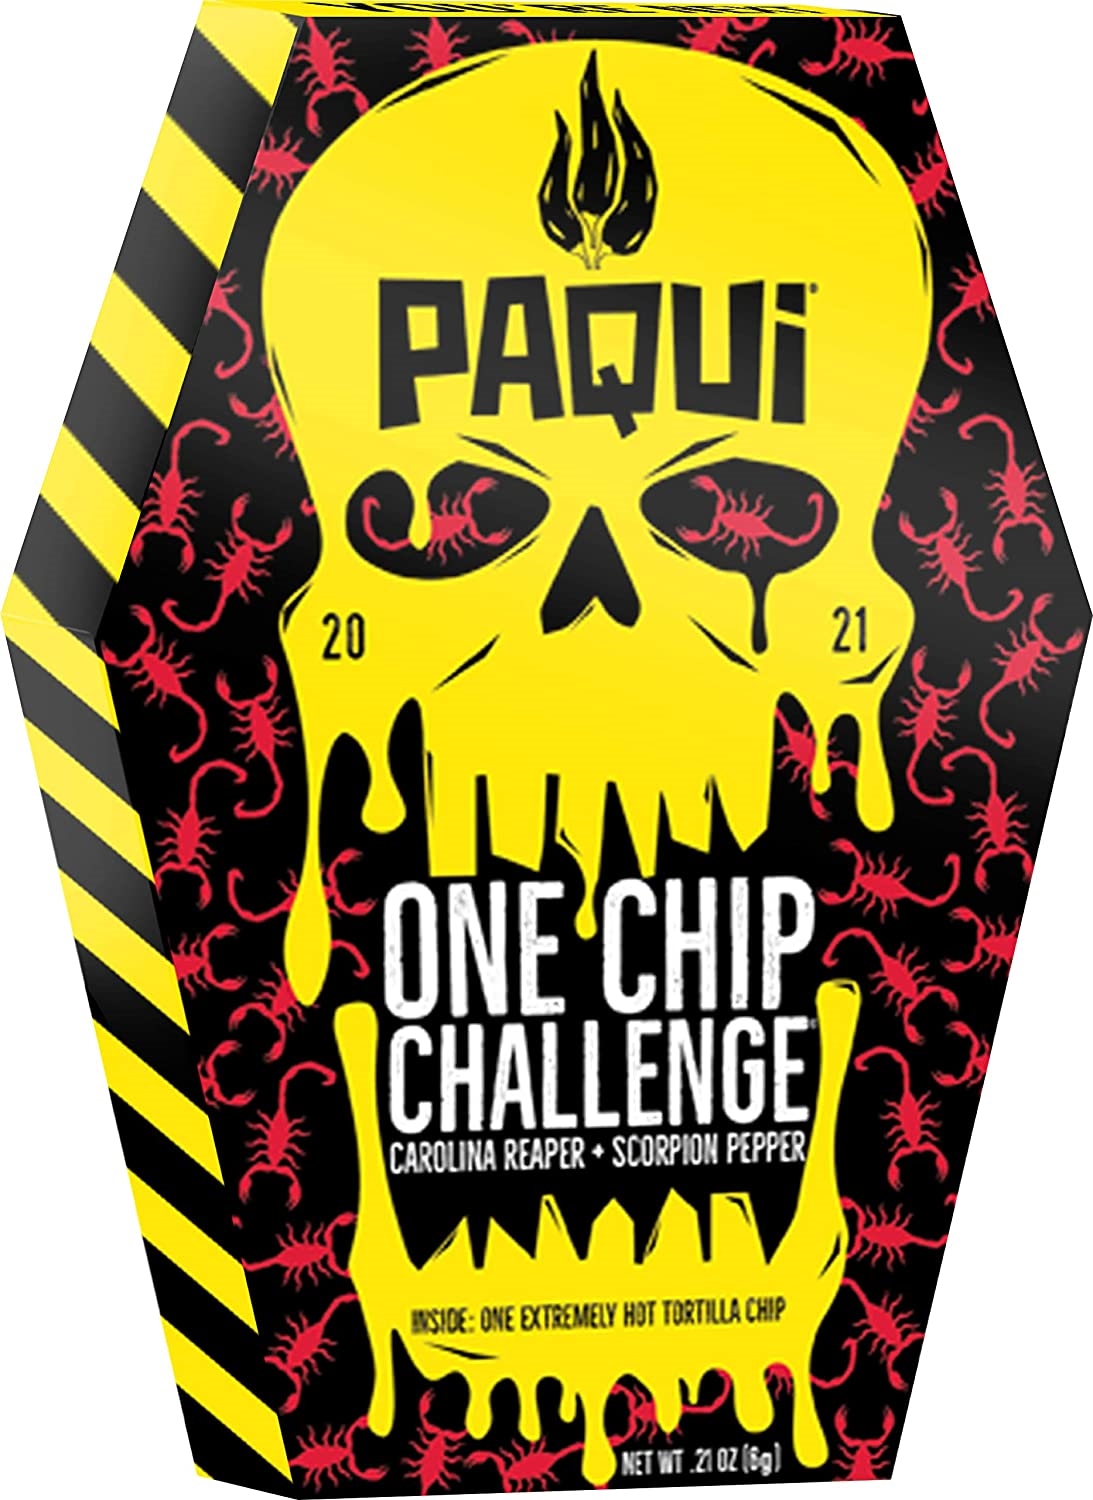 2021 Paqui One Chip Challenge